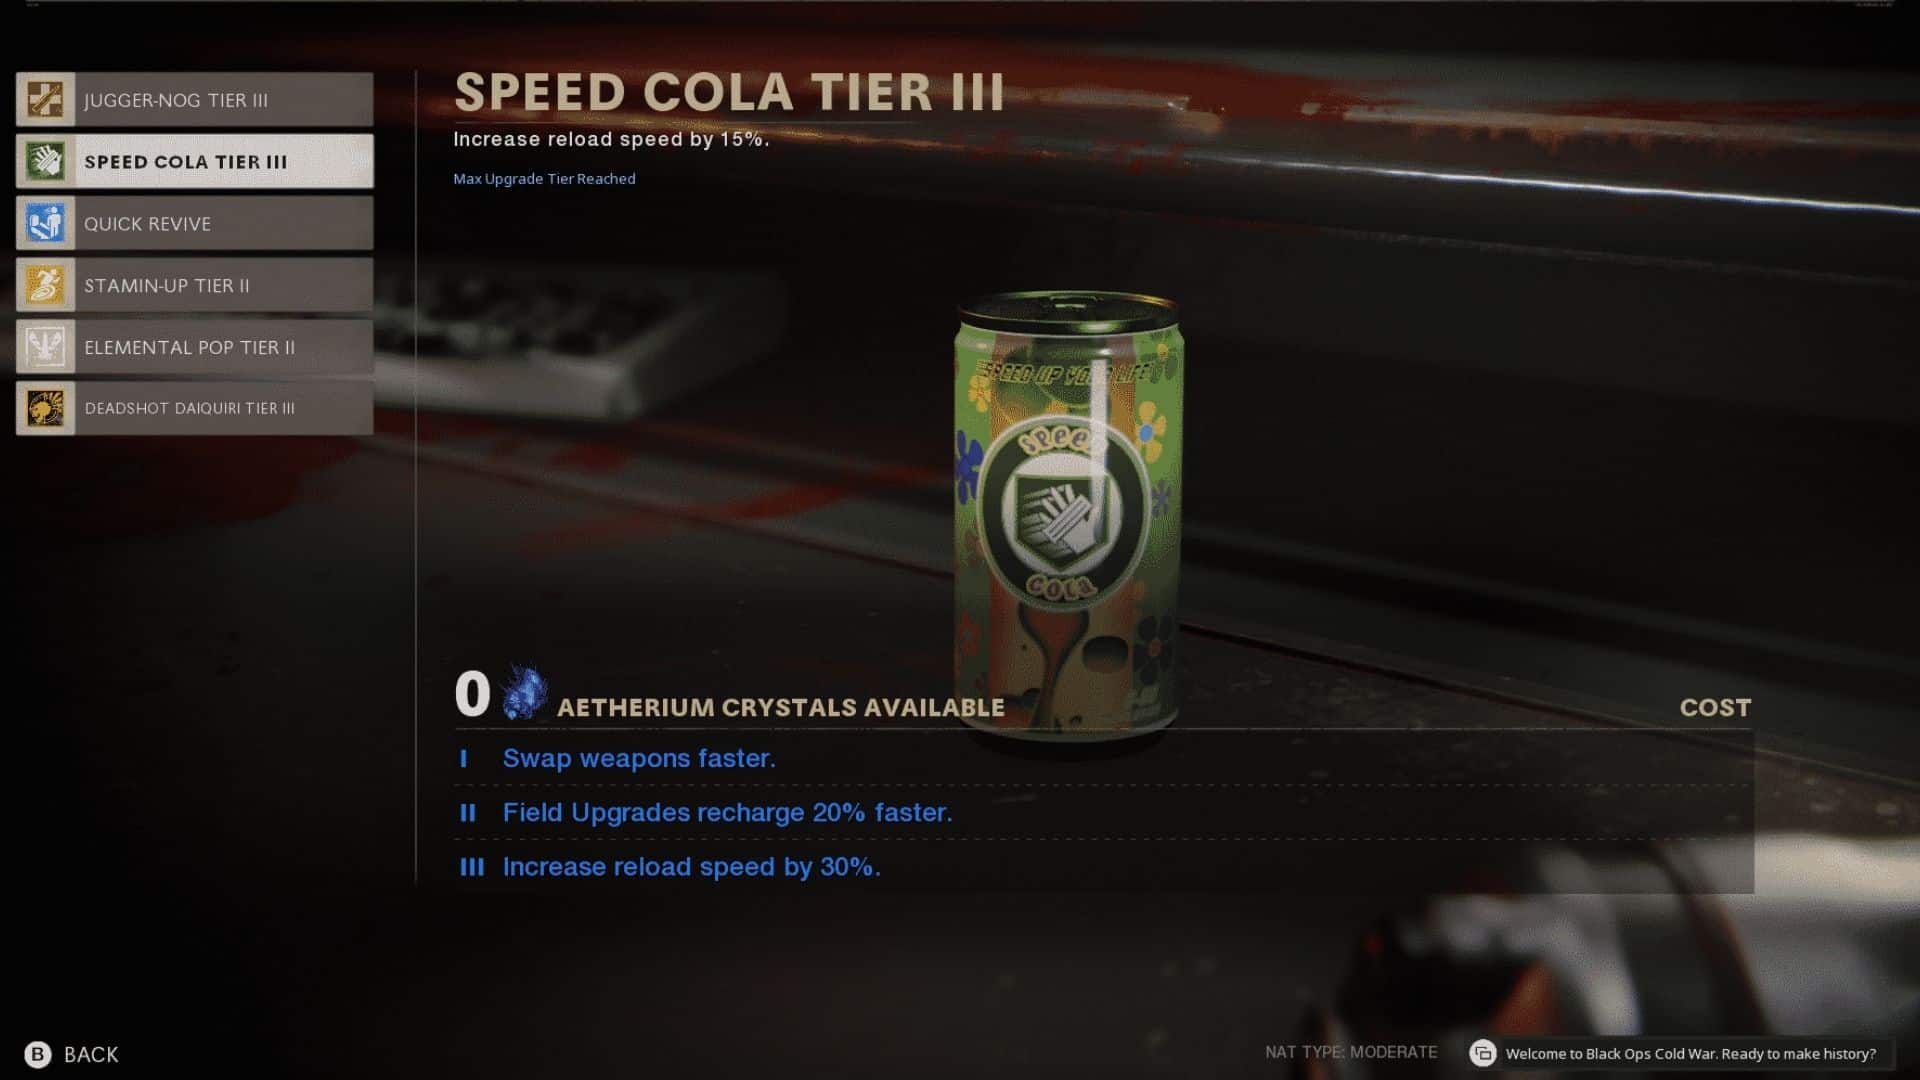 Speed cola perk in Black ops cold war